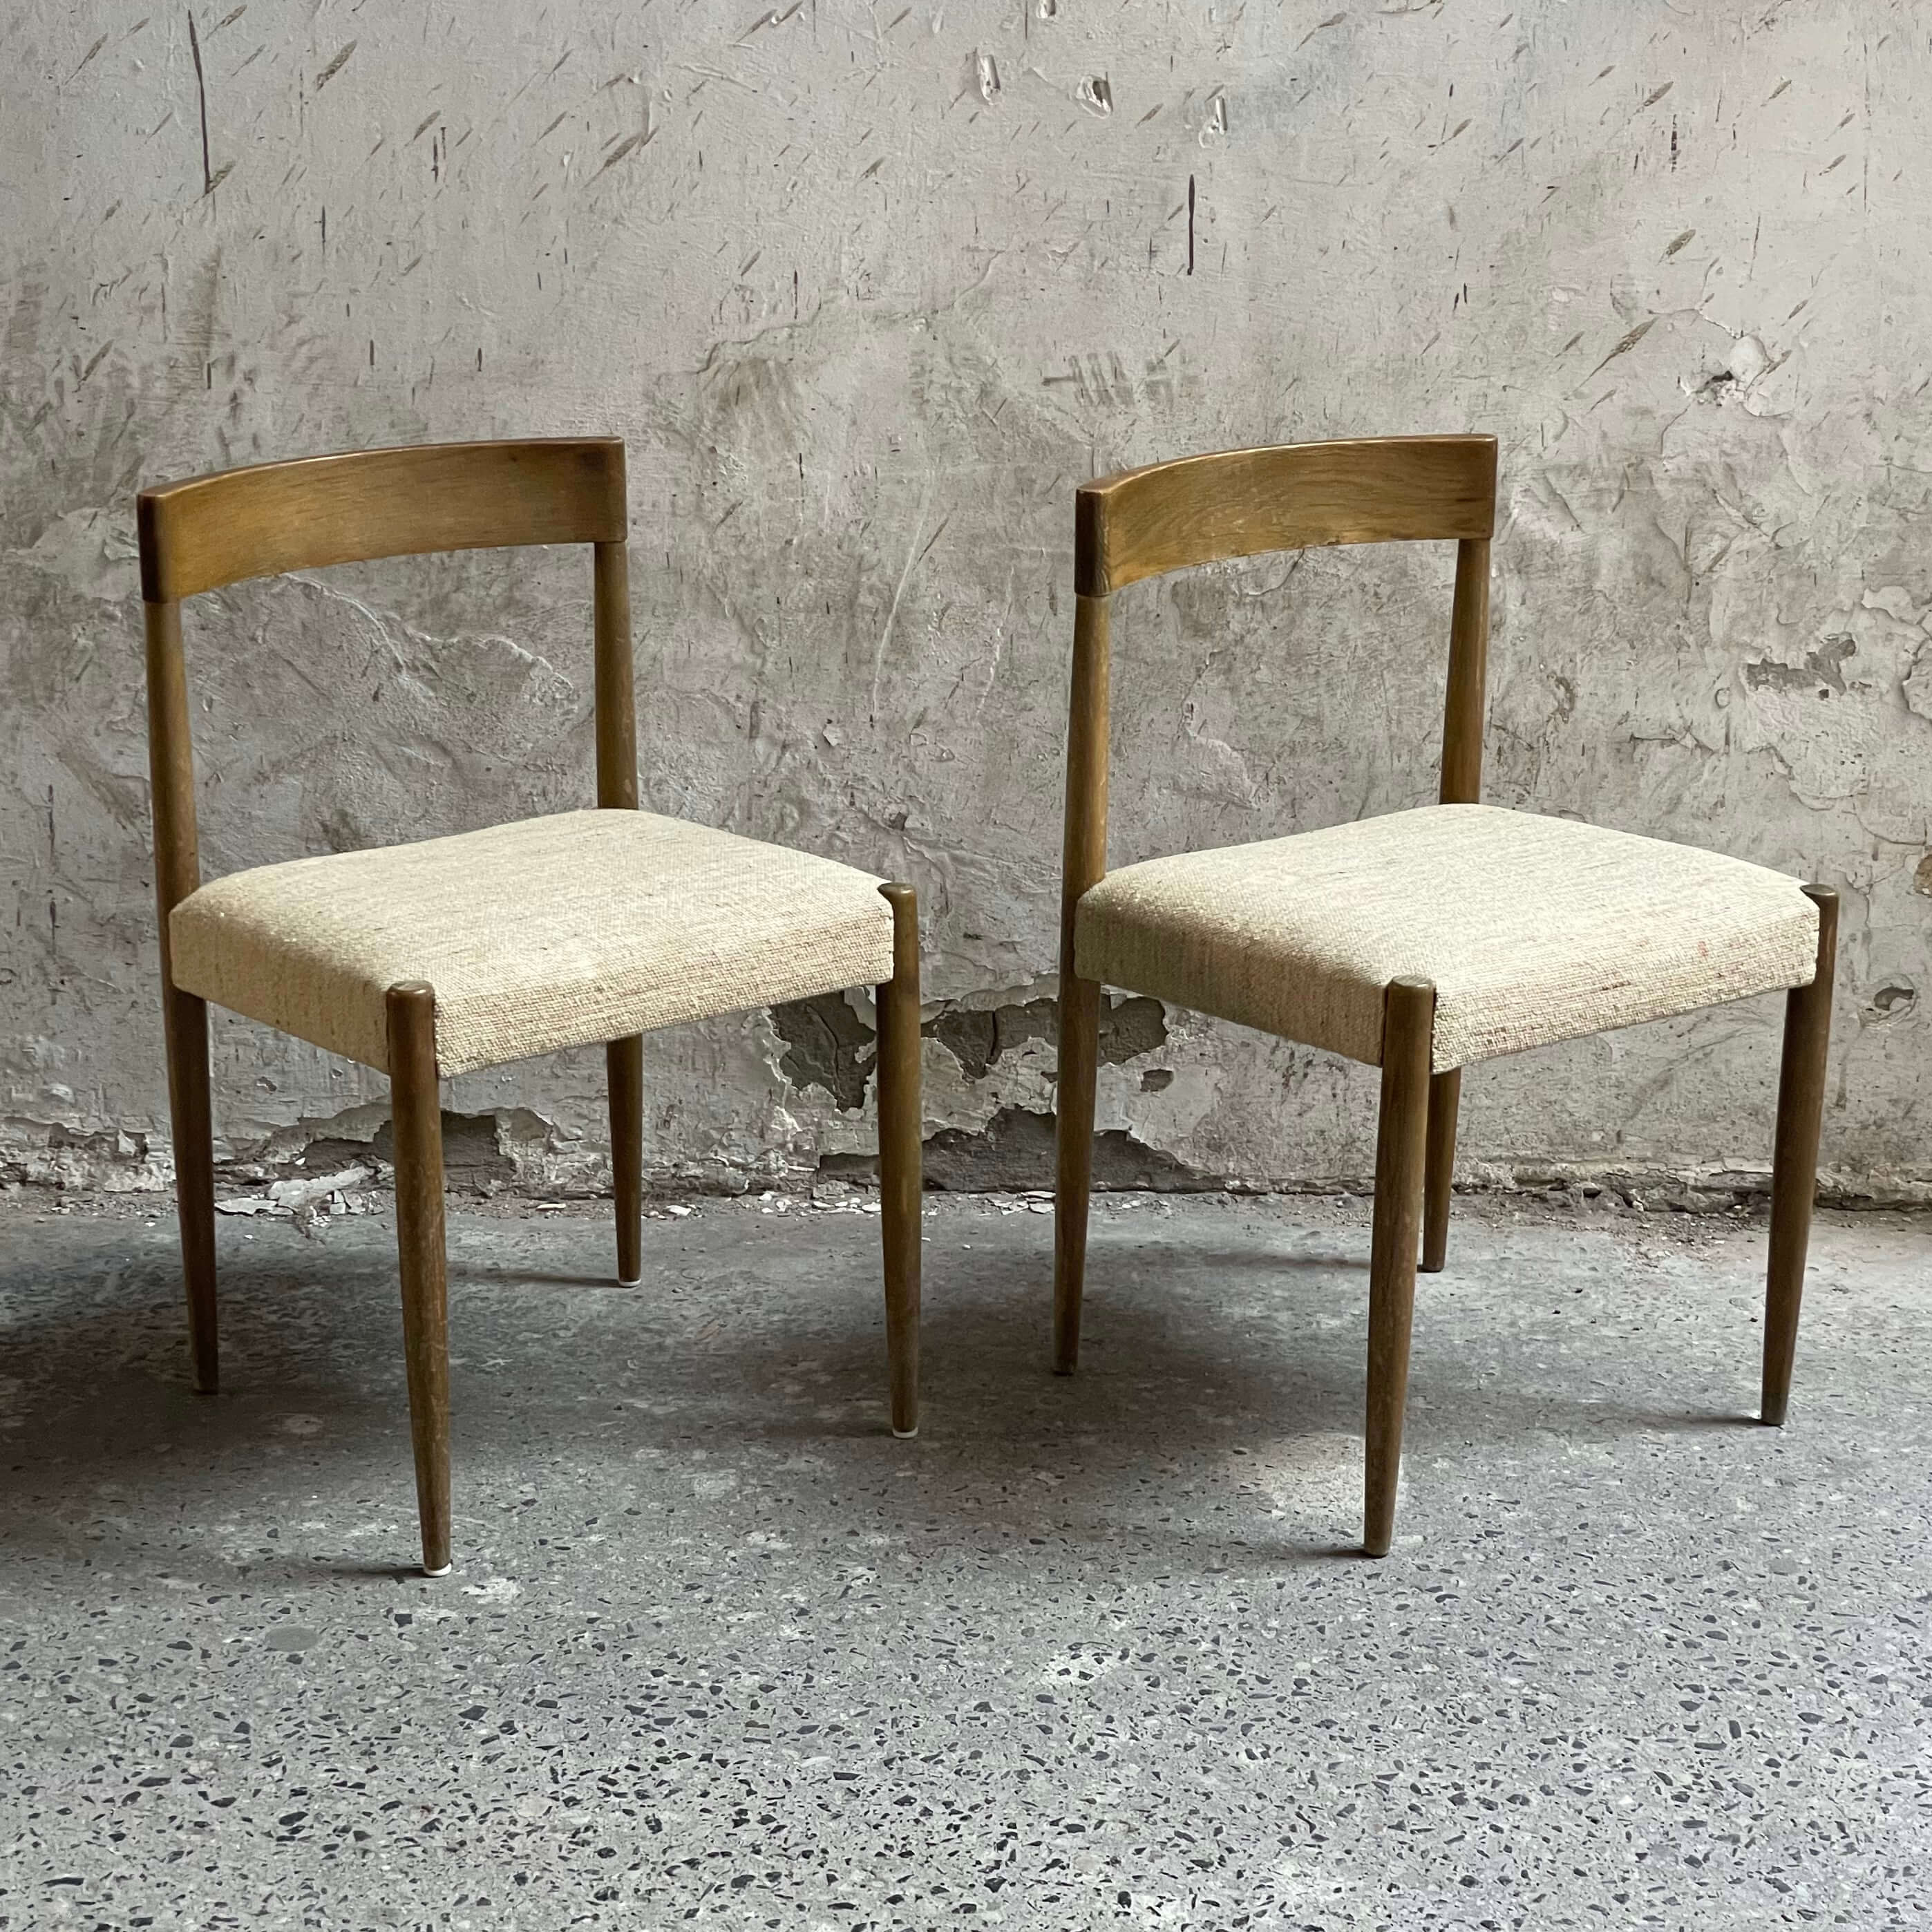 Lubke chairs wood textile vintage german design dining